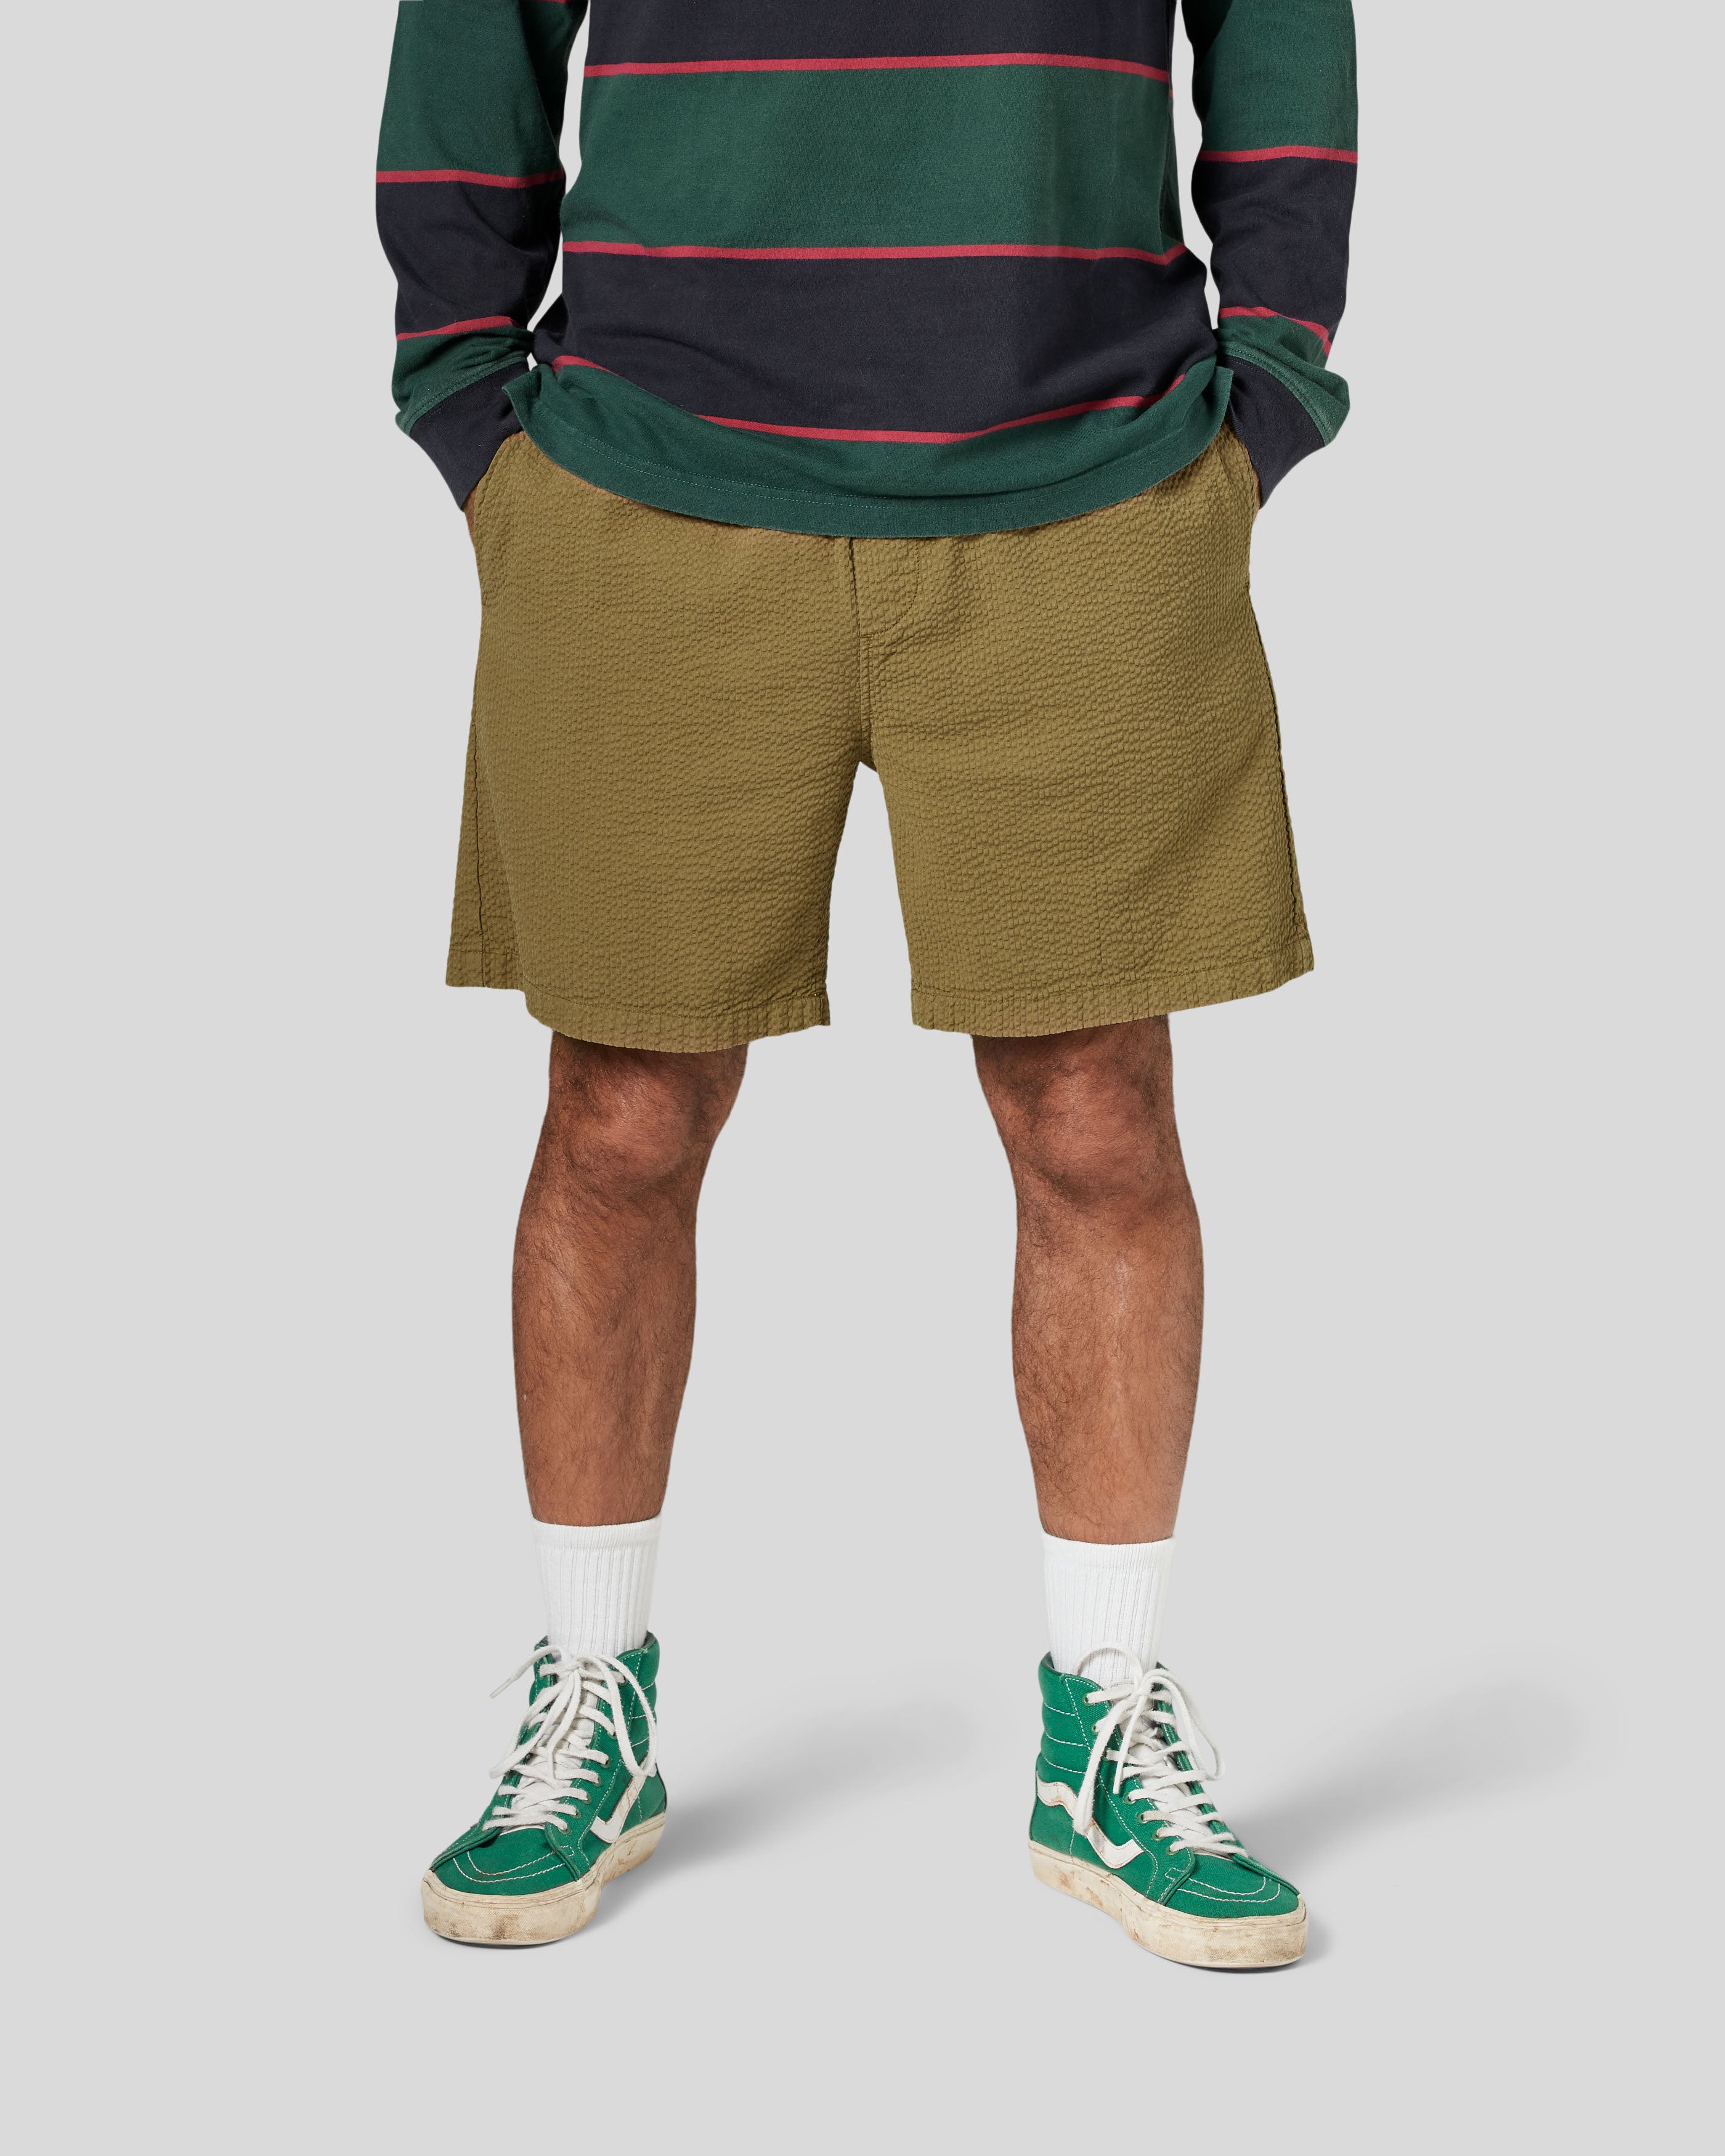 Atlantico Shorts - Olive